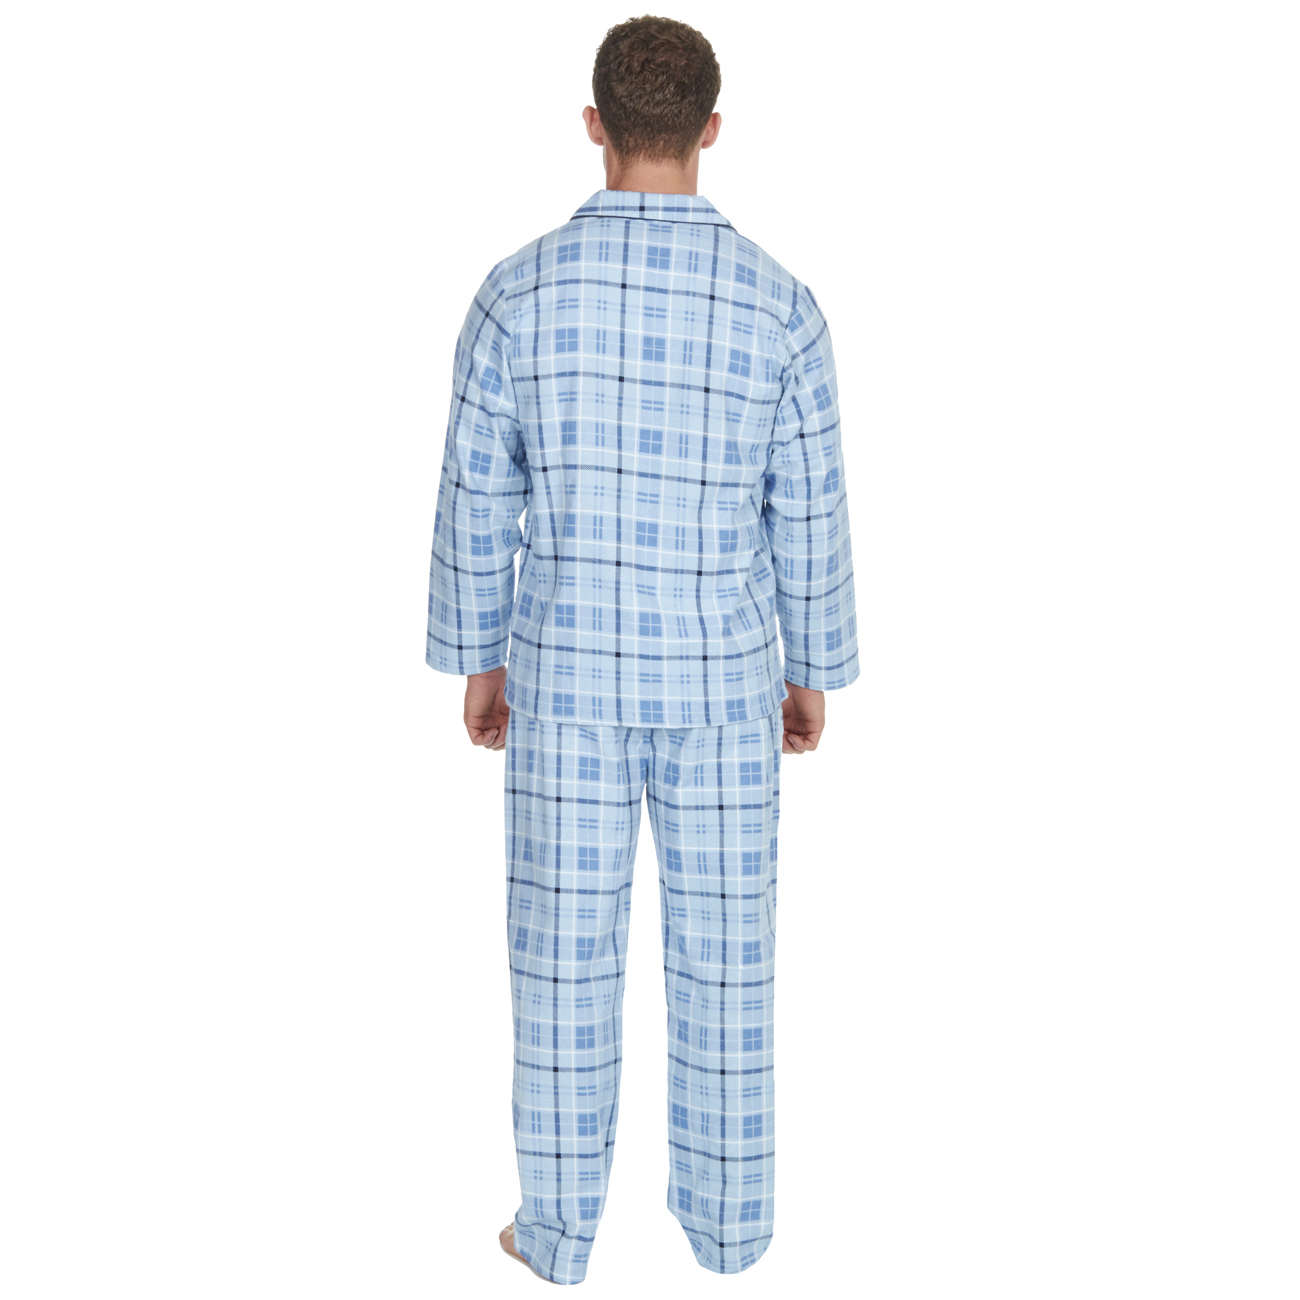 KENTEX Men's Traditional Warm Flannel Pyjama Set Thermal 100% Cotton napped Flannelette M L XL XXL 3XL 4XL 5XL 